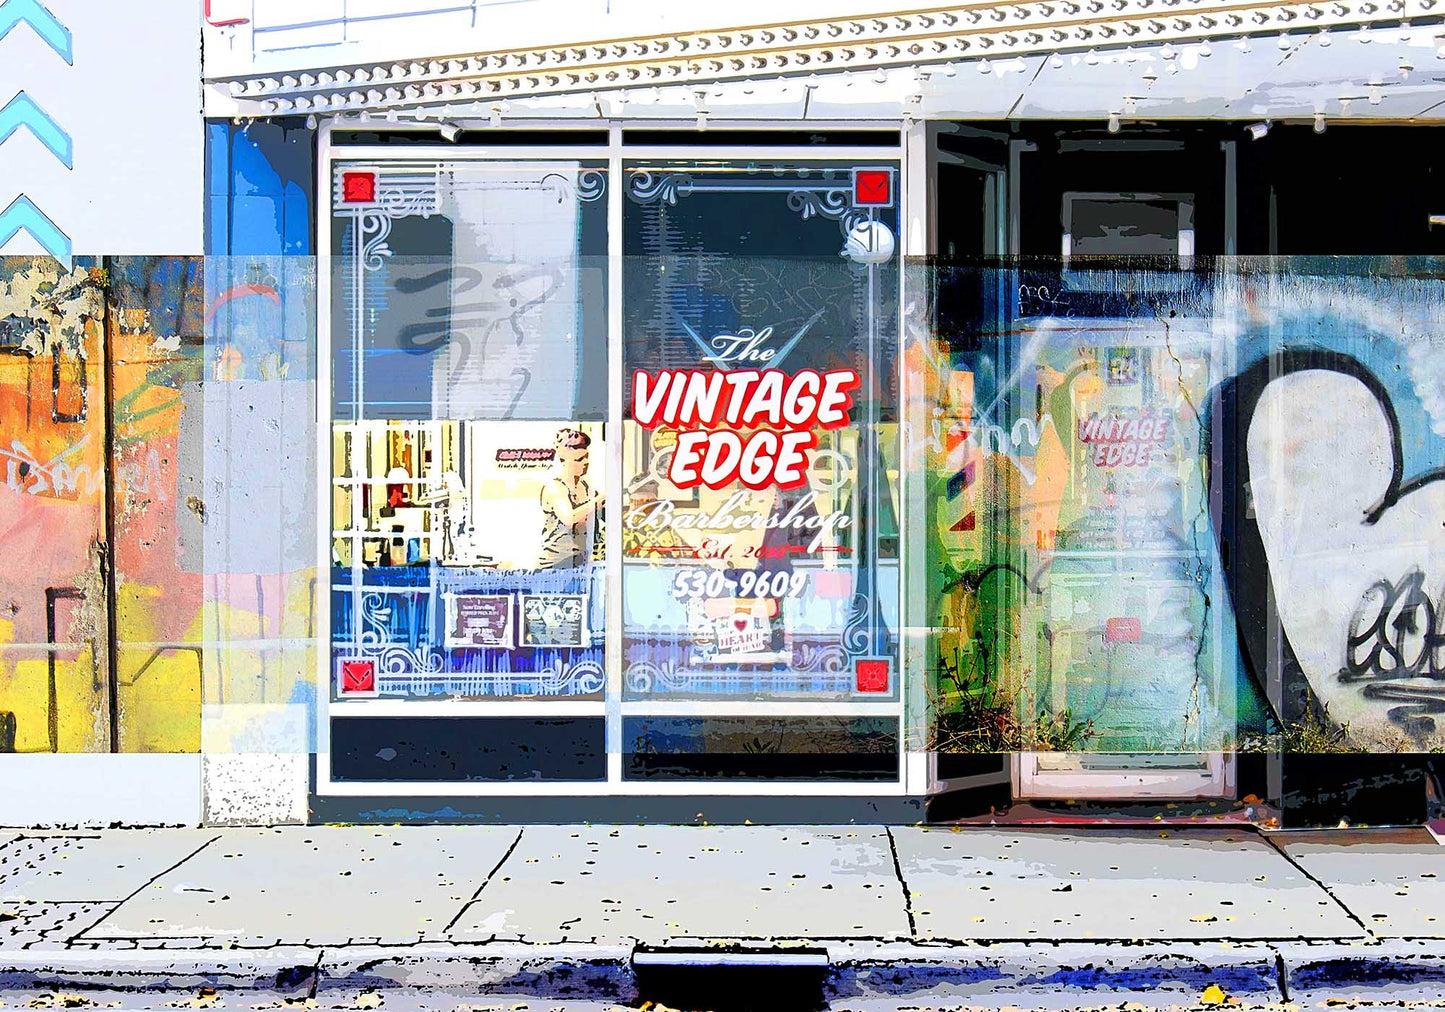 The Vintage Edge